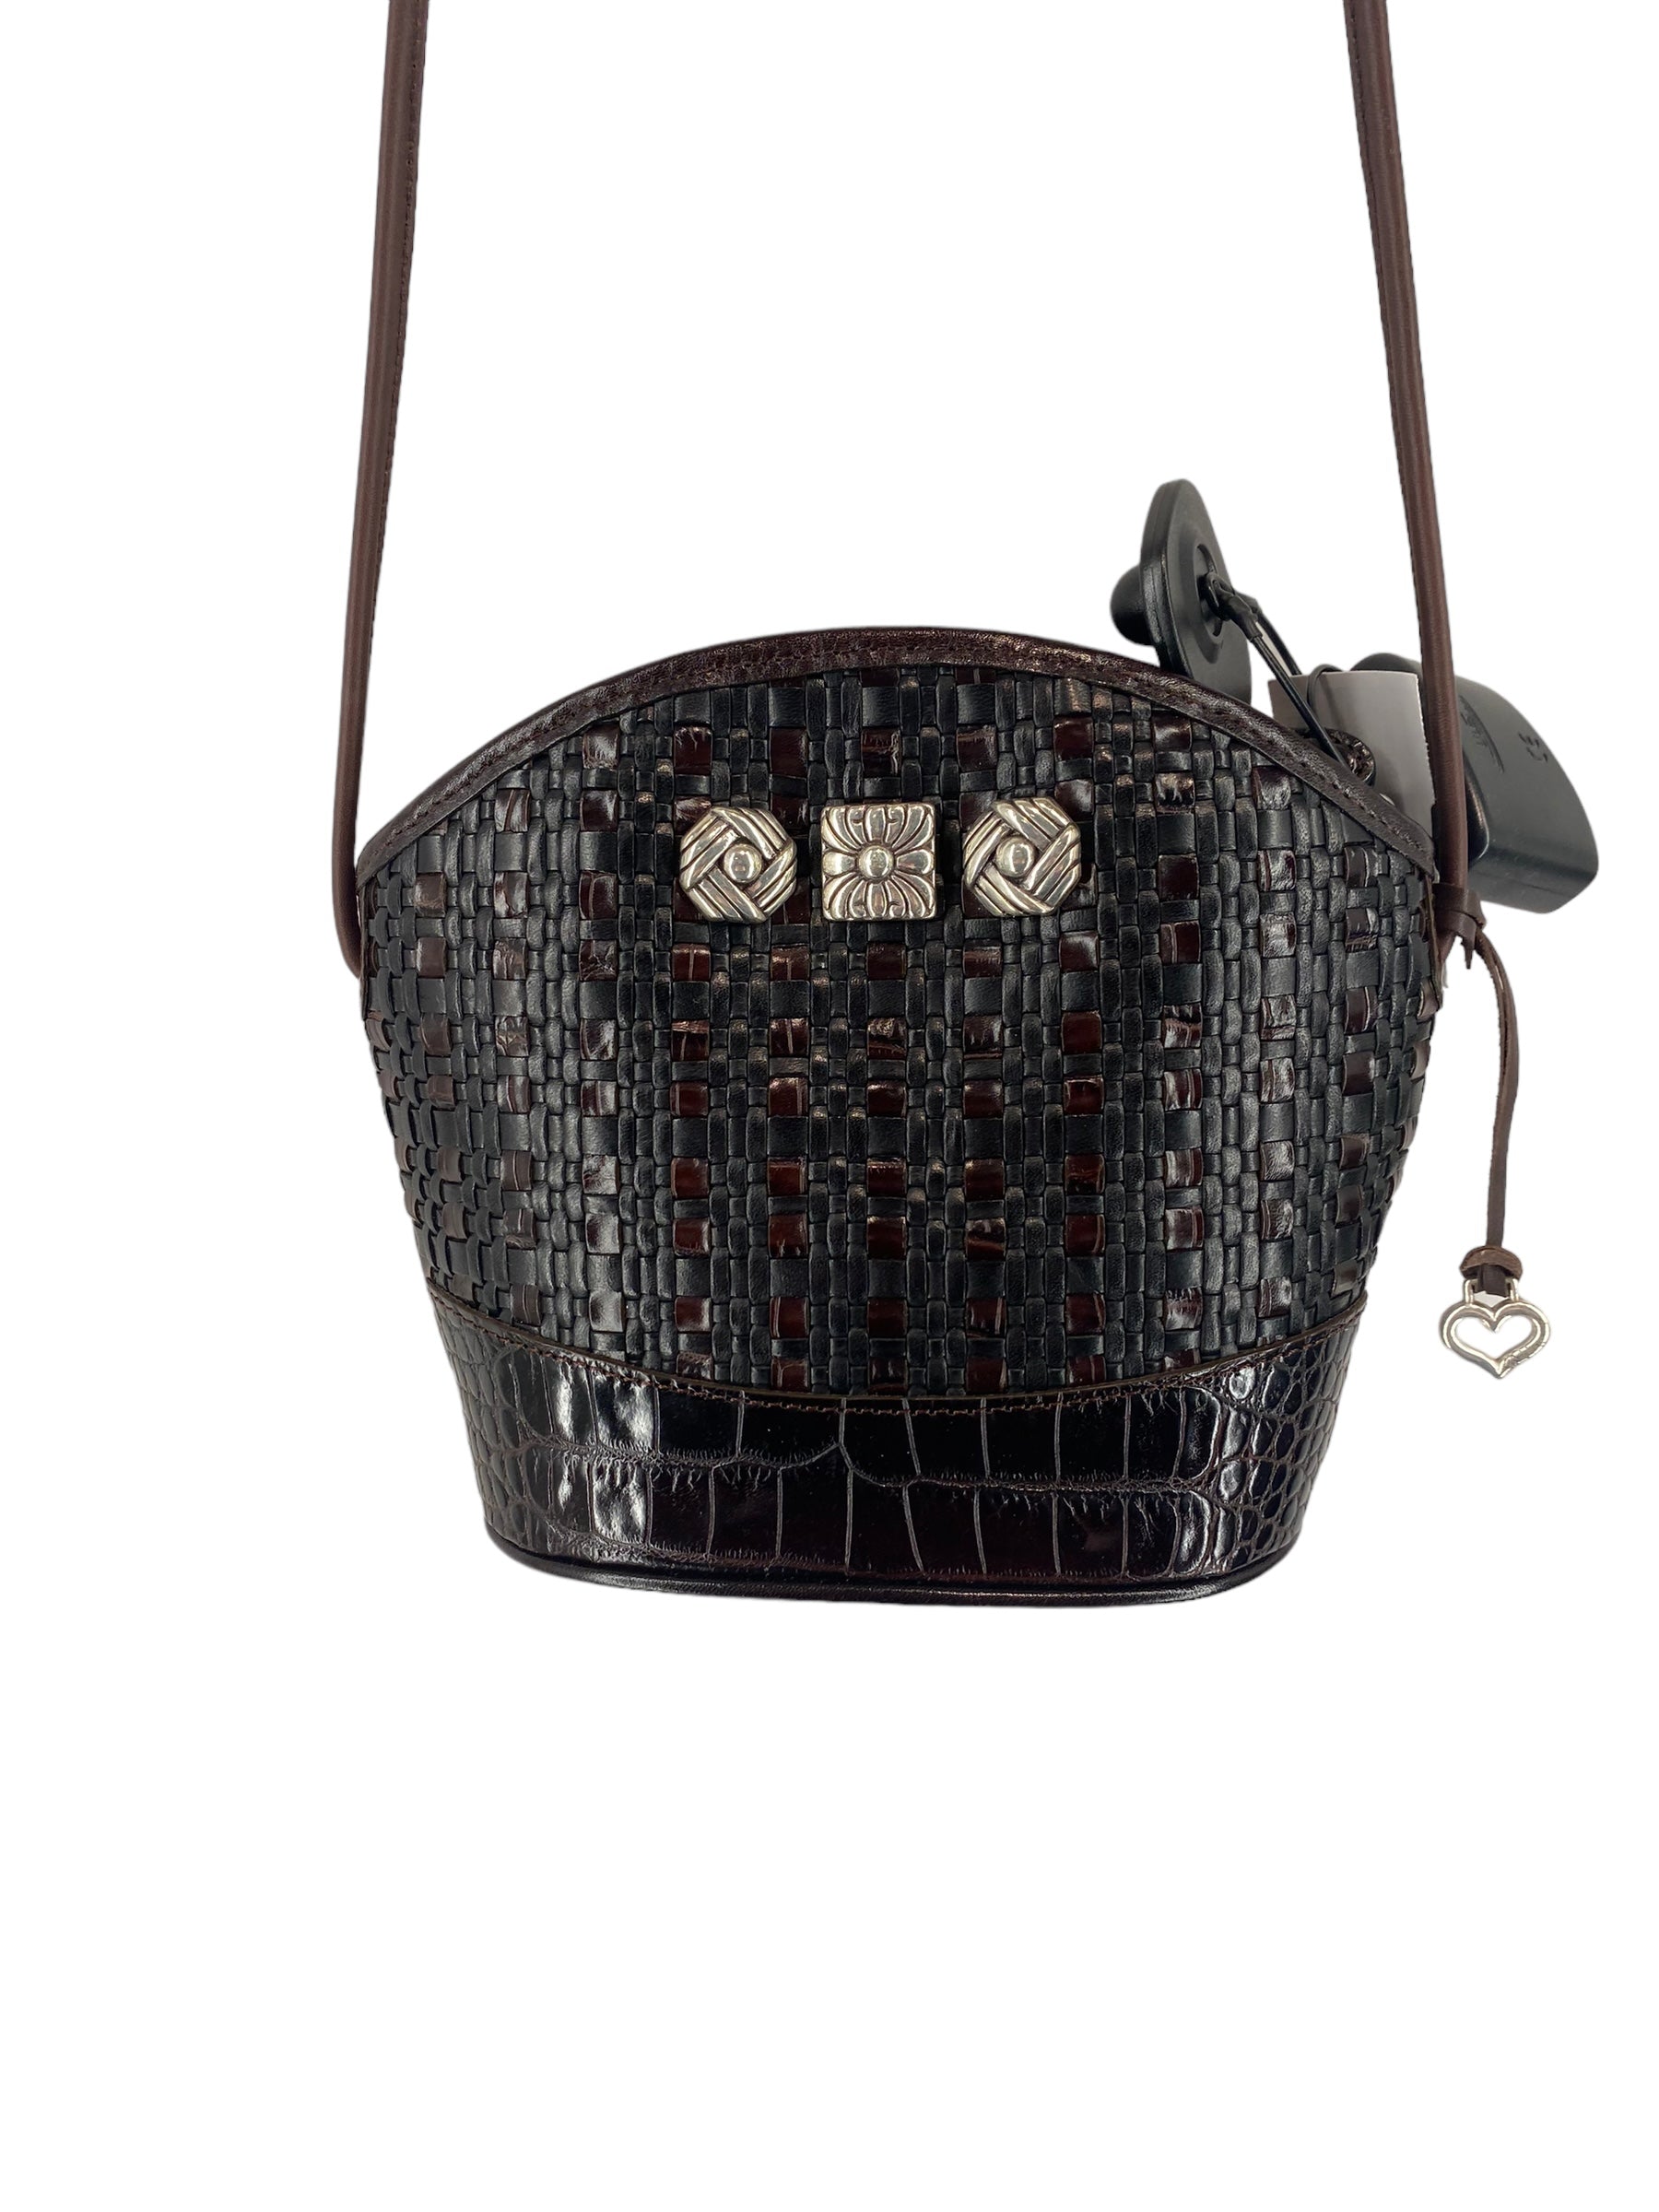 Brighton brown leather basket weave bucket purse shoulder bag | Bucket purse,  Purses, Shoulder bag